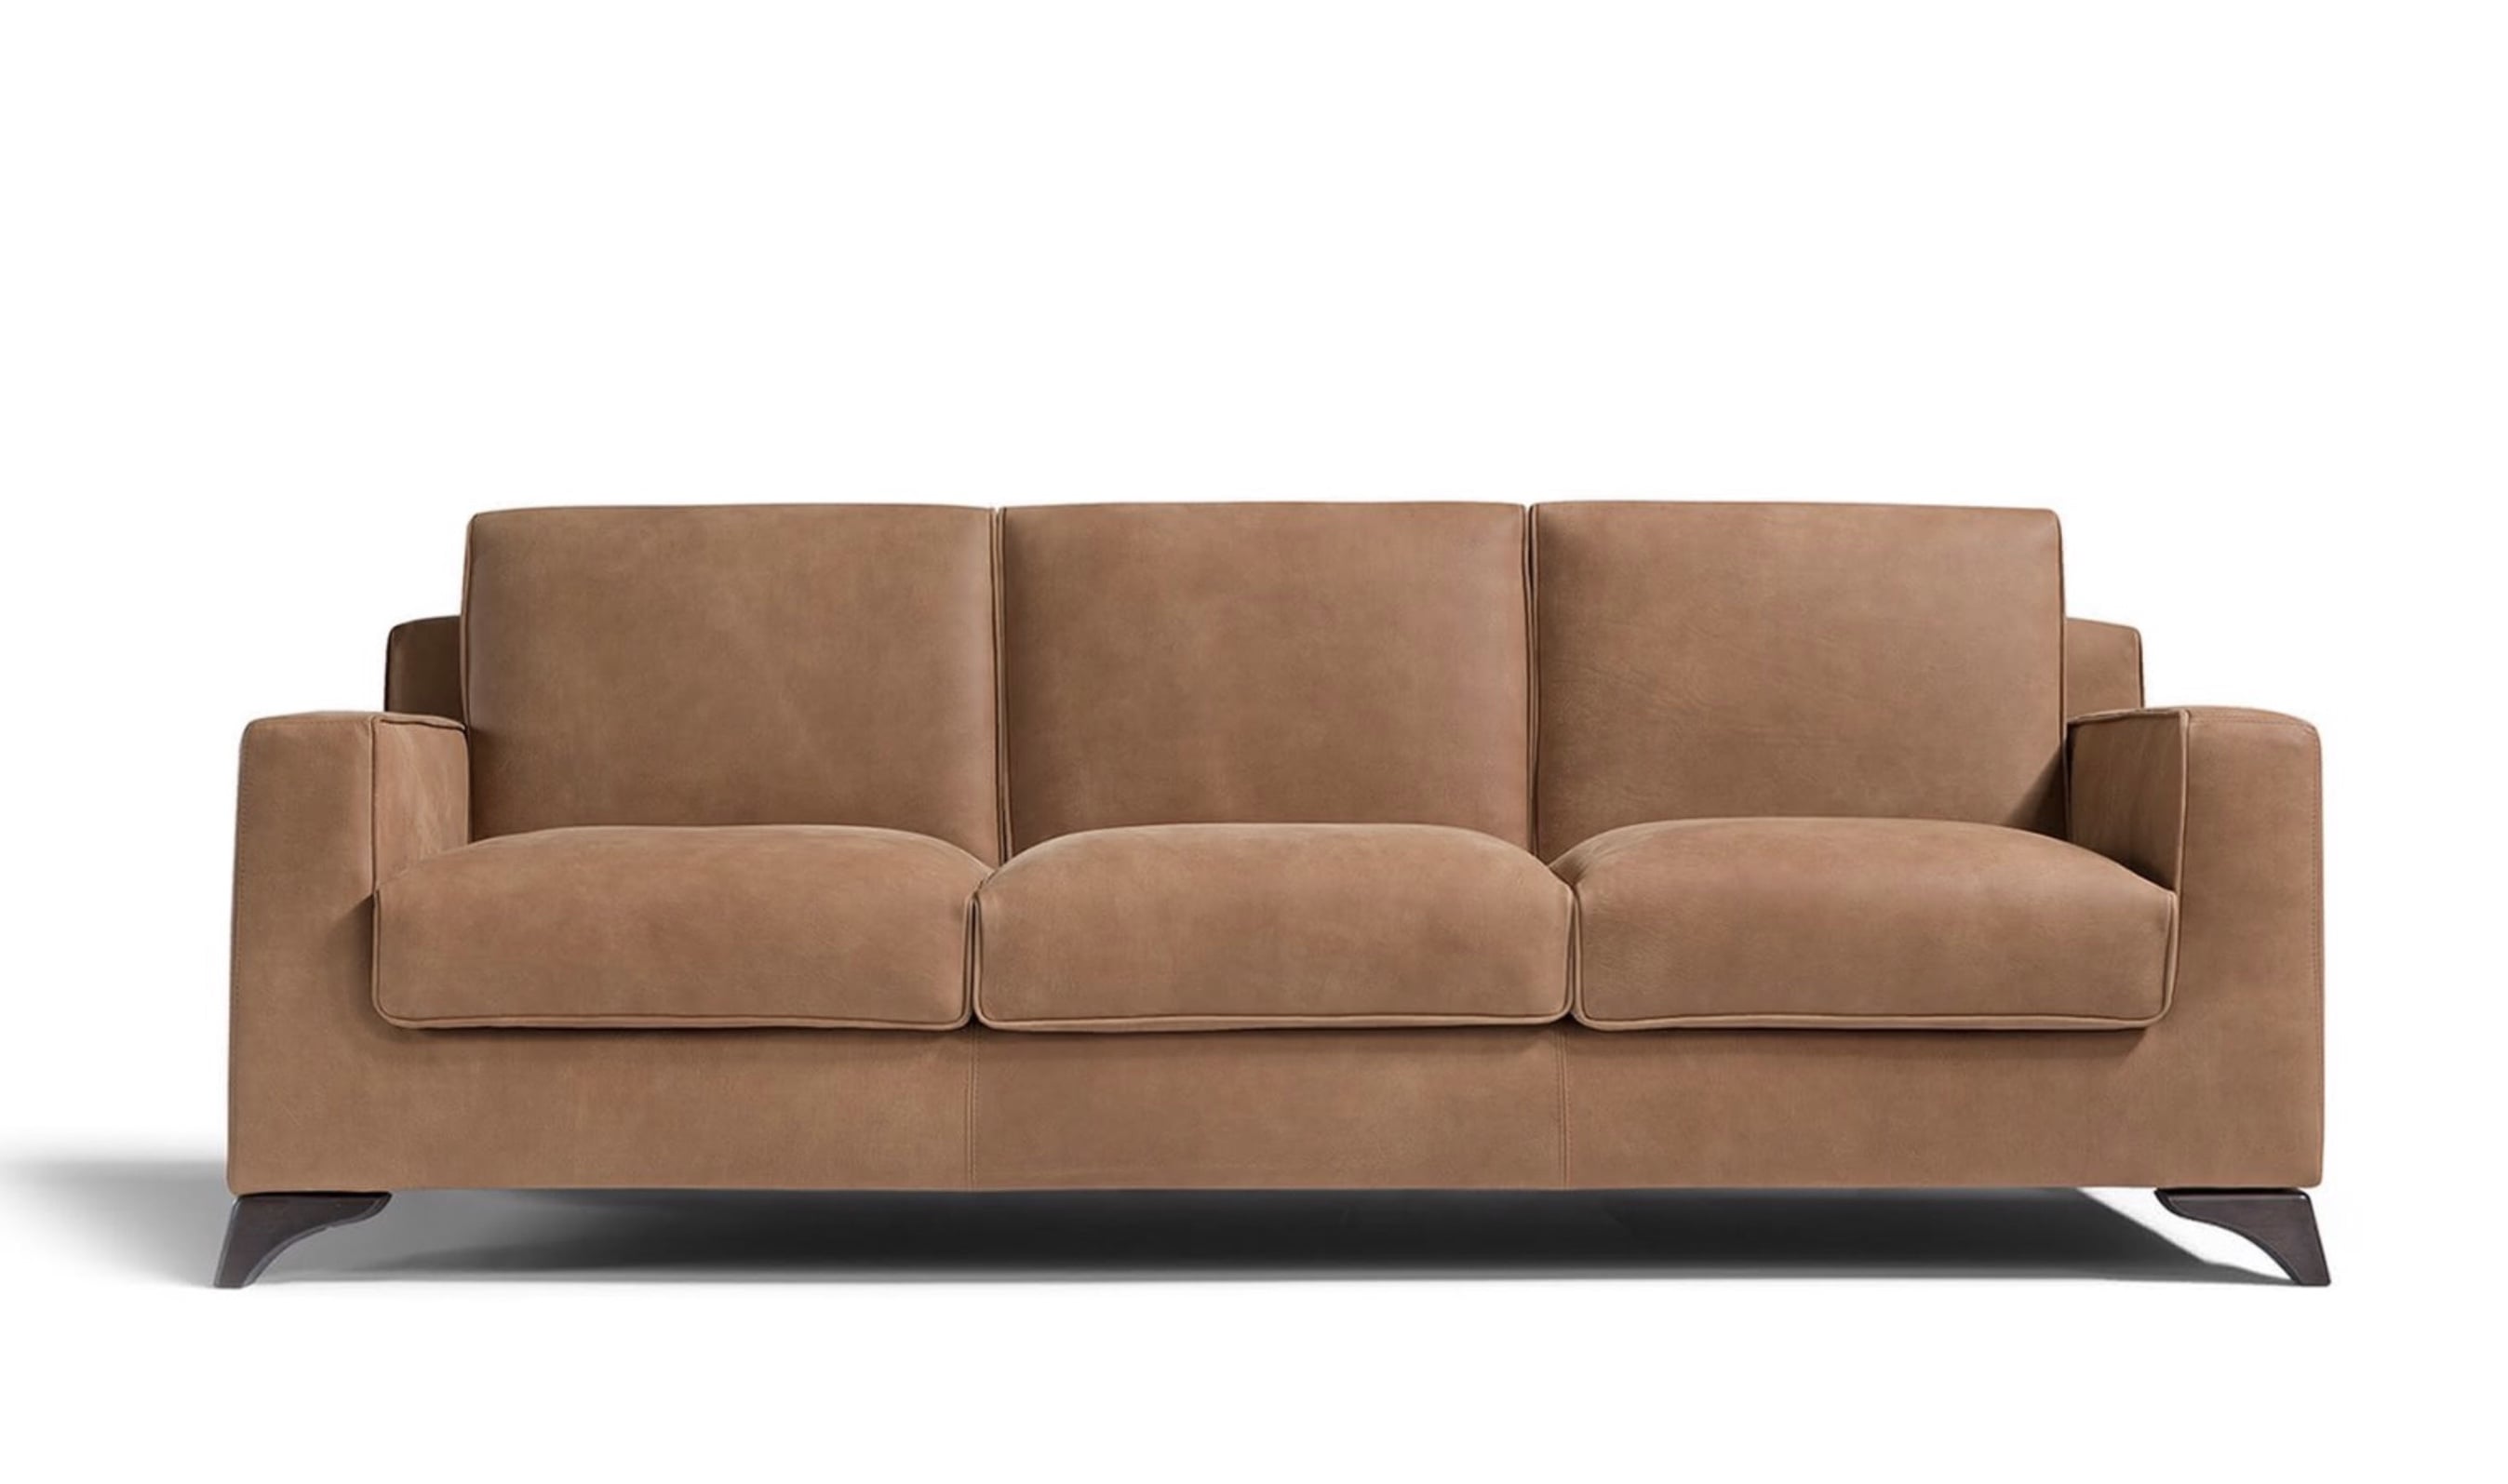 Made to Order Furniture. - Sofa 002-01